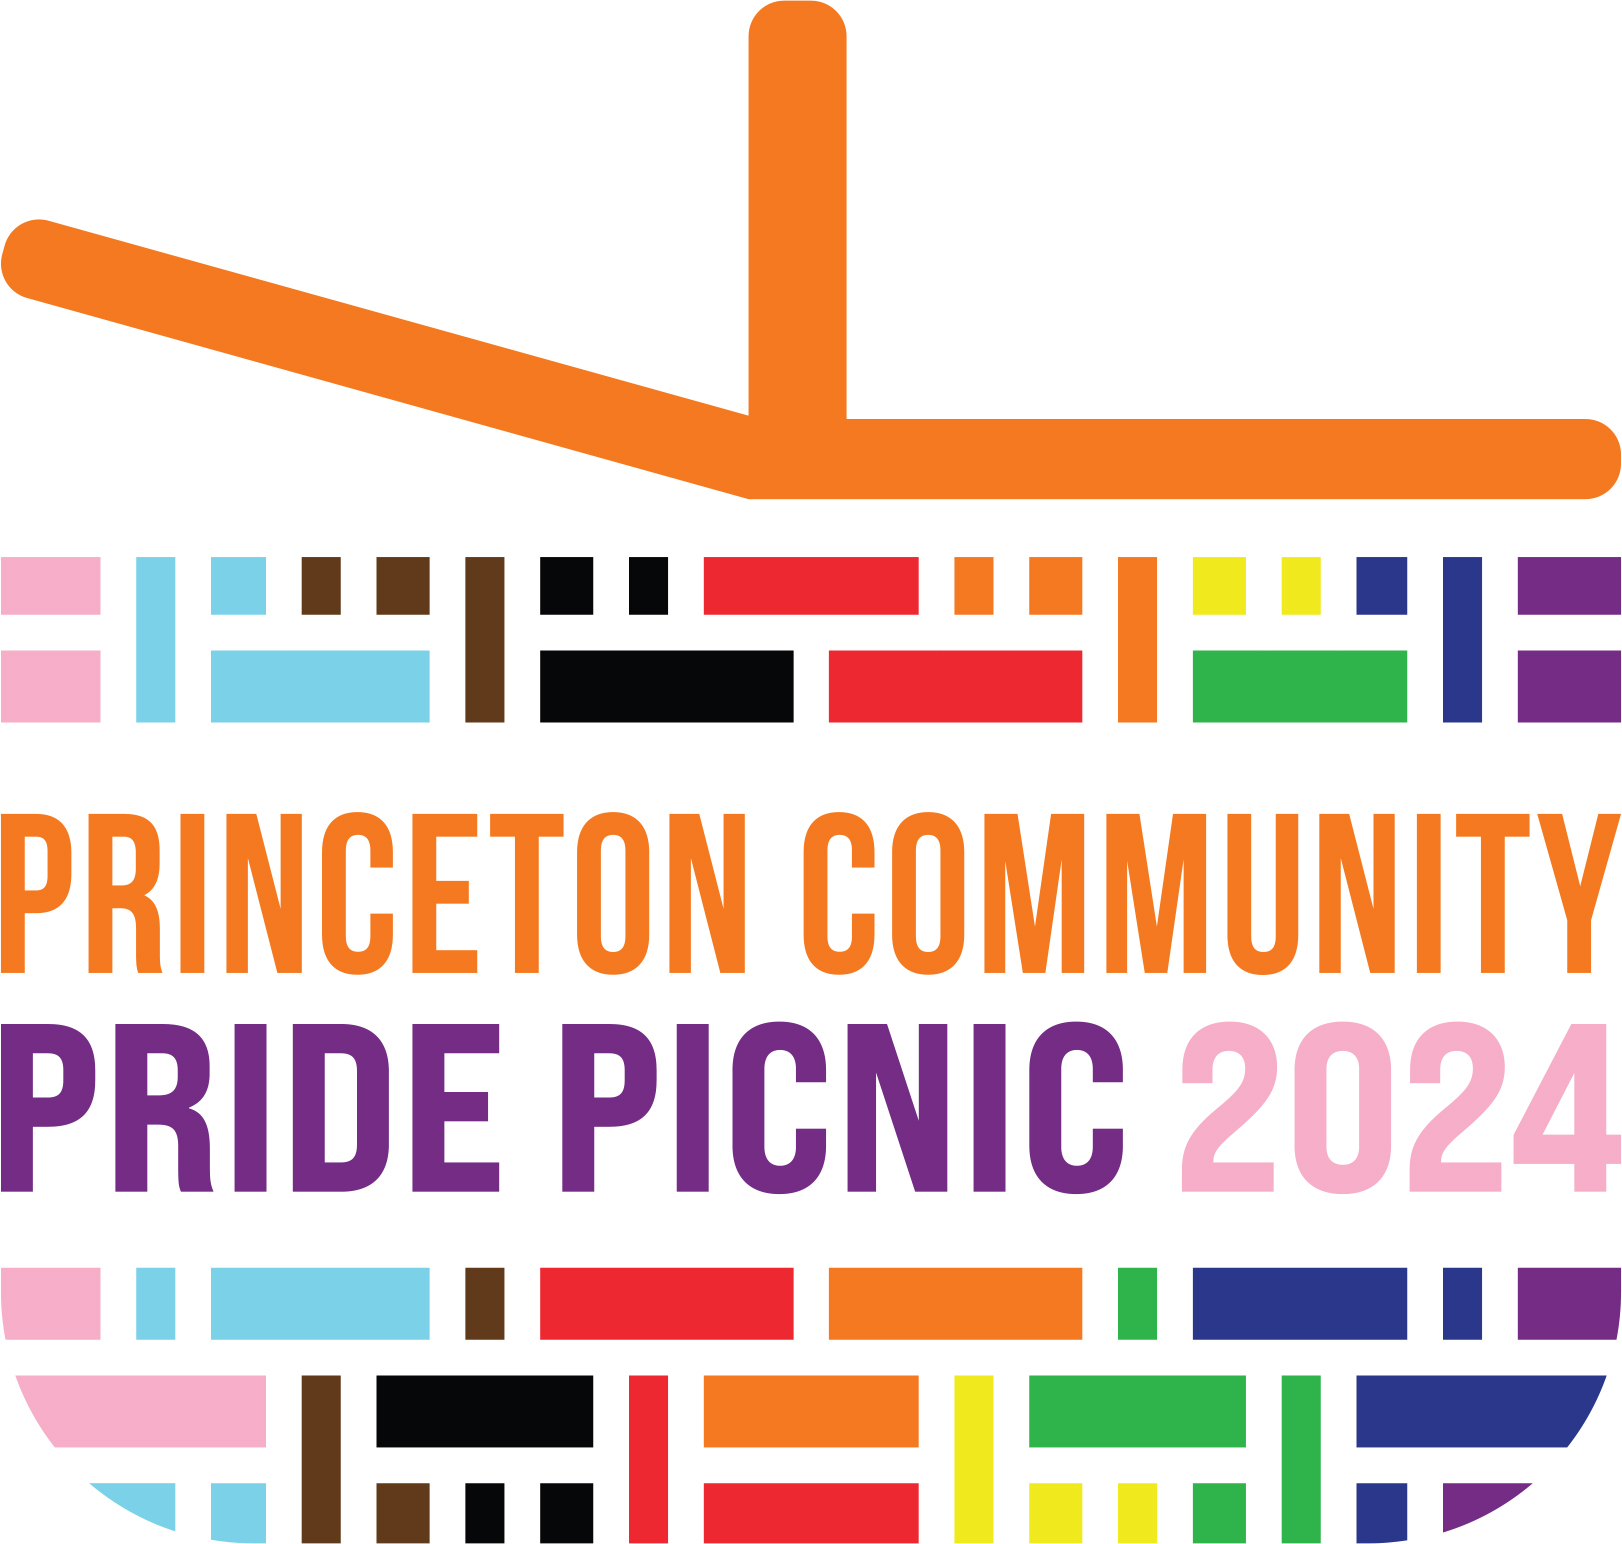 Princeton Community Pride Picnic